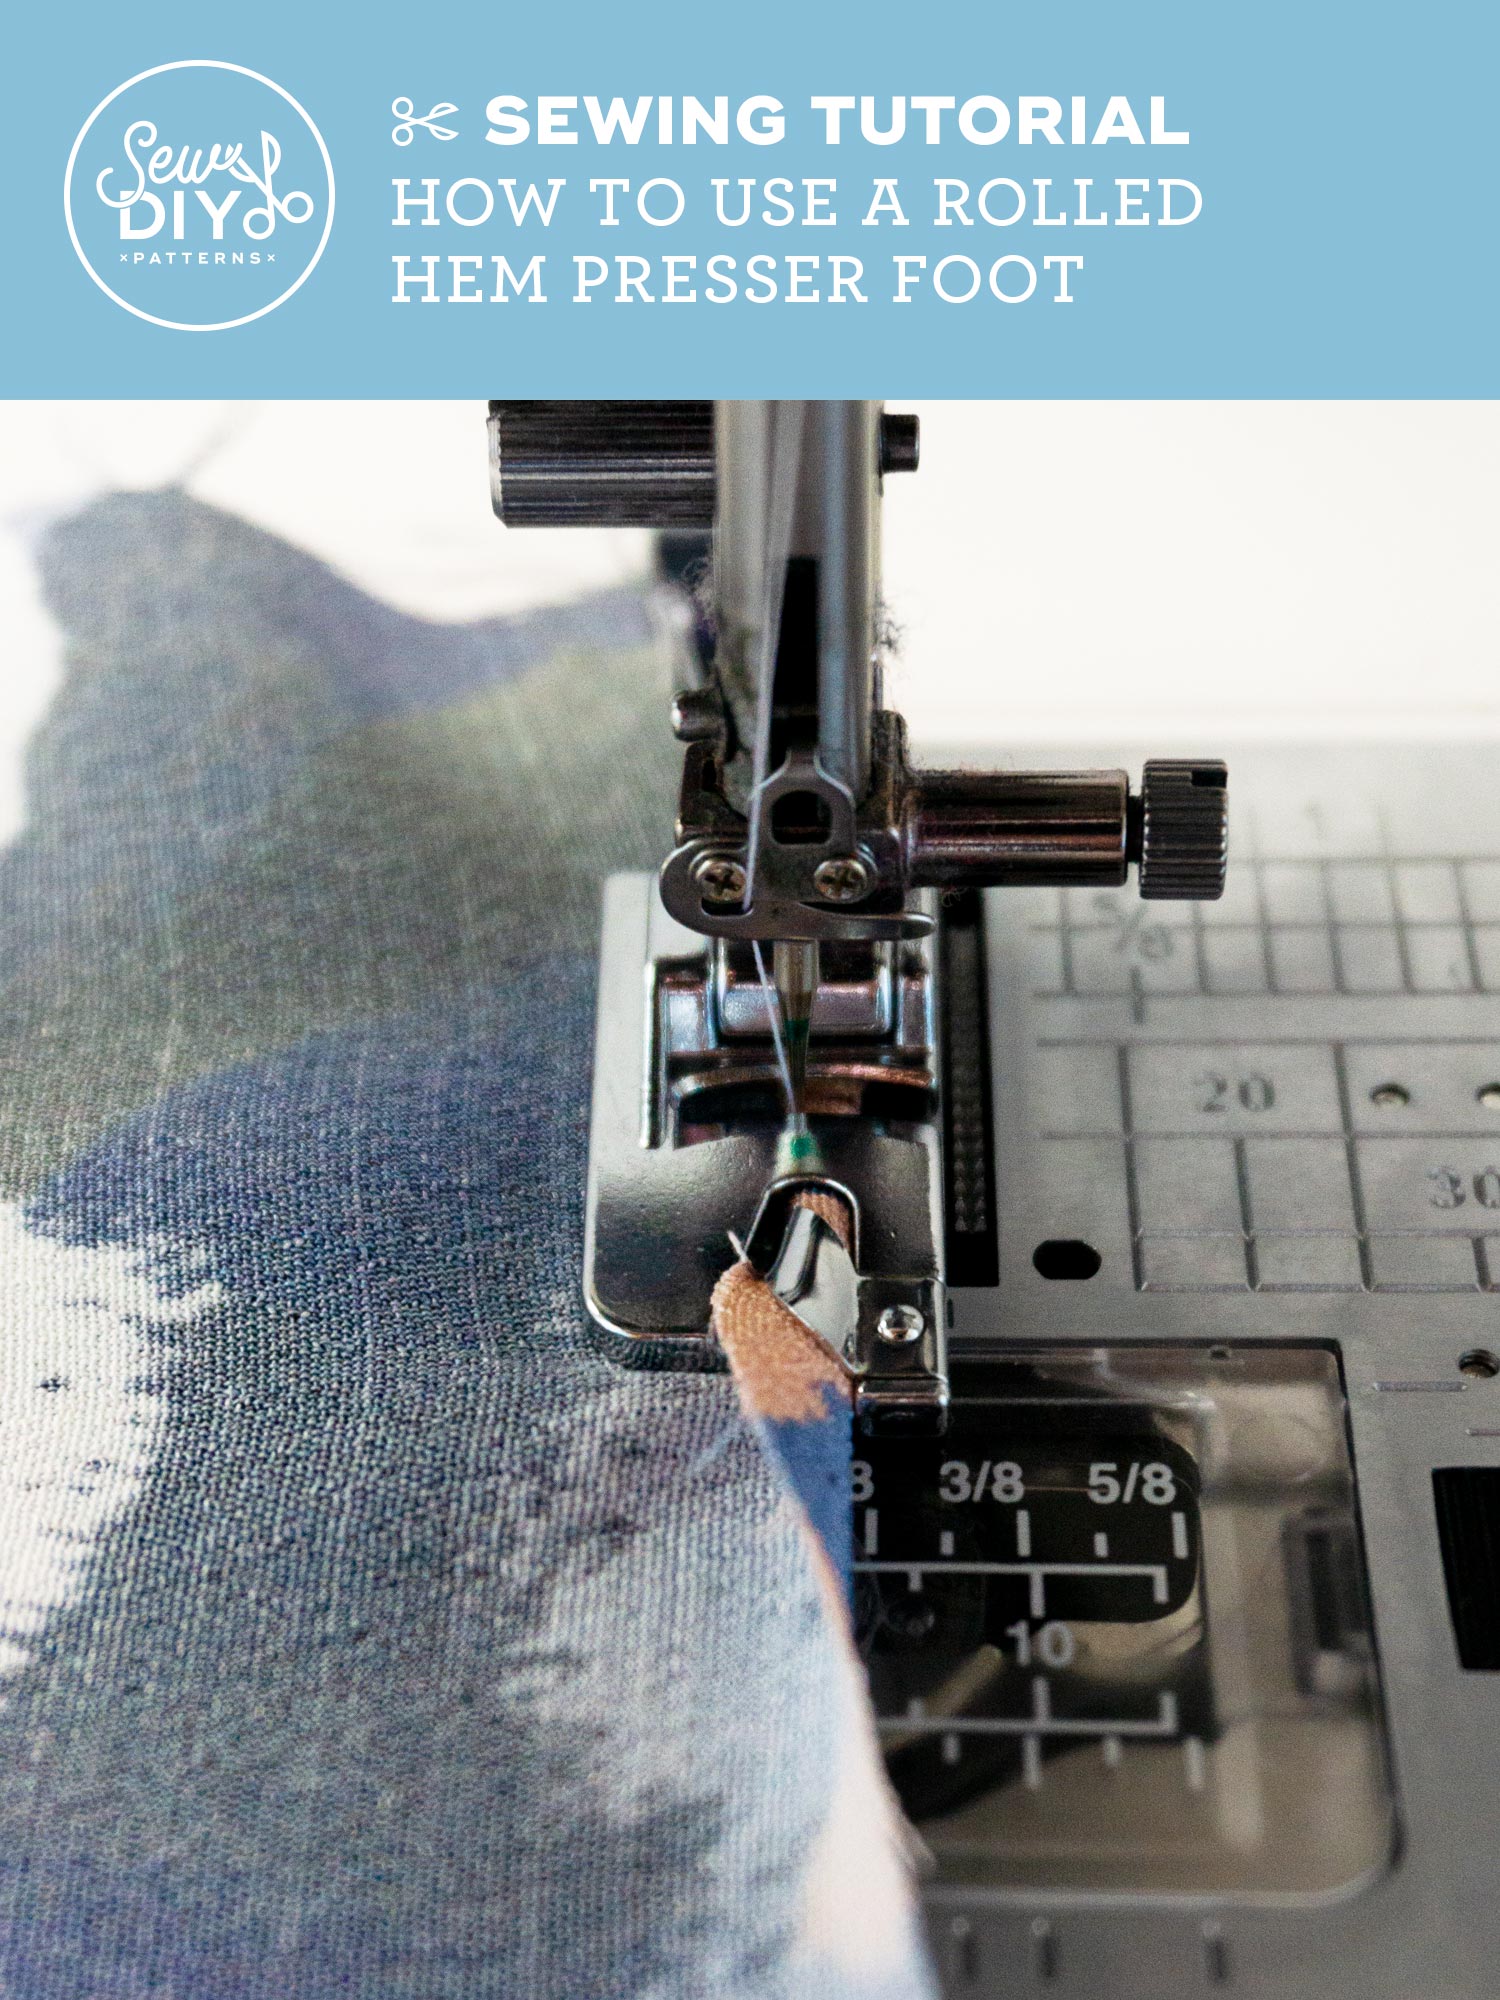 Rolled Hem Sewing Tutorial Using A Rolled Hem Foot